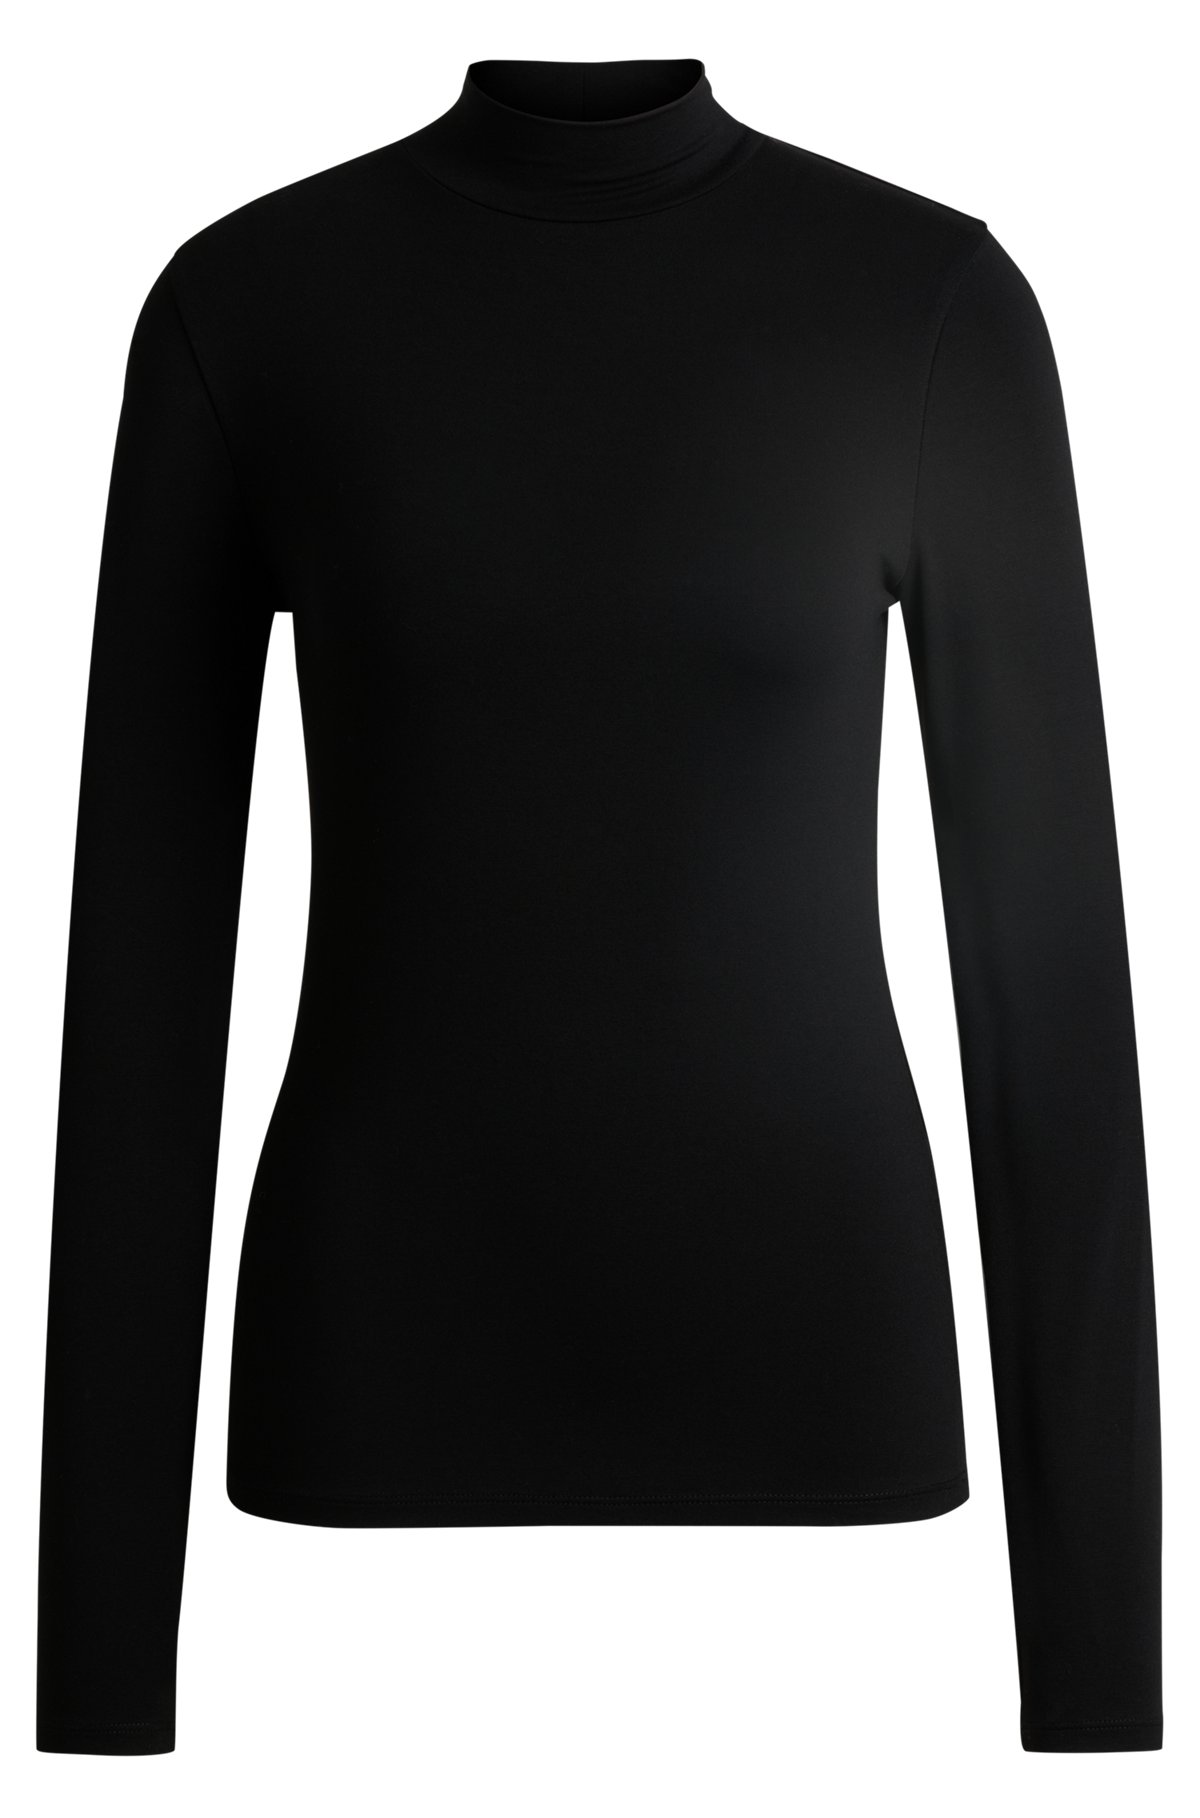 Extra-slim-fit long-sleeved top with mock neckline, Black